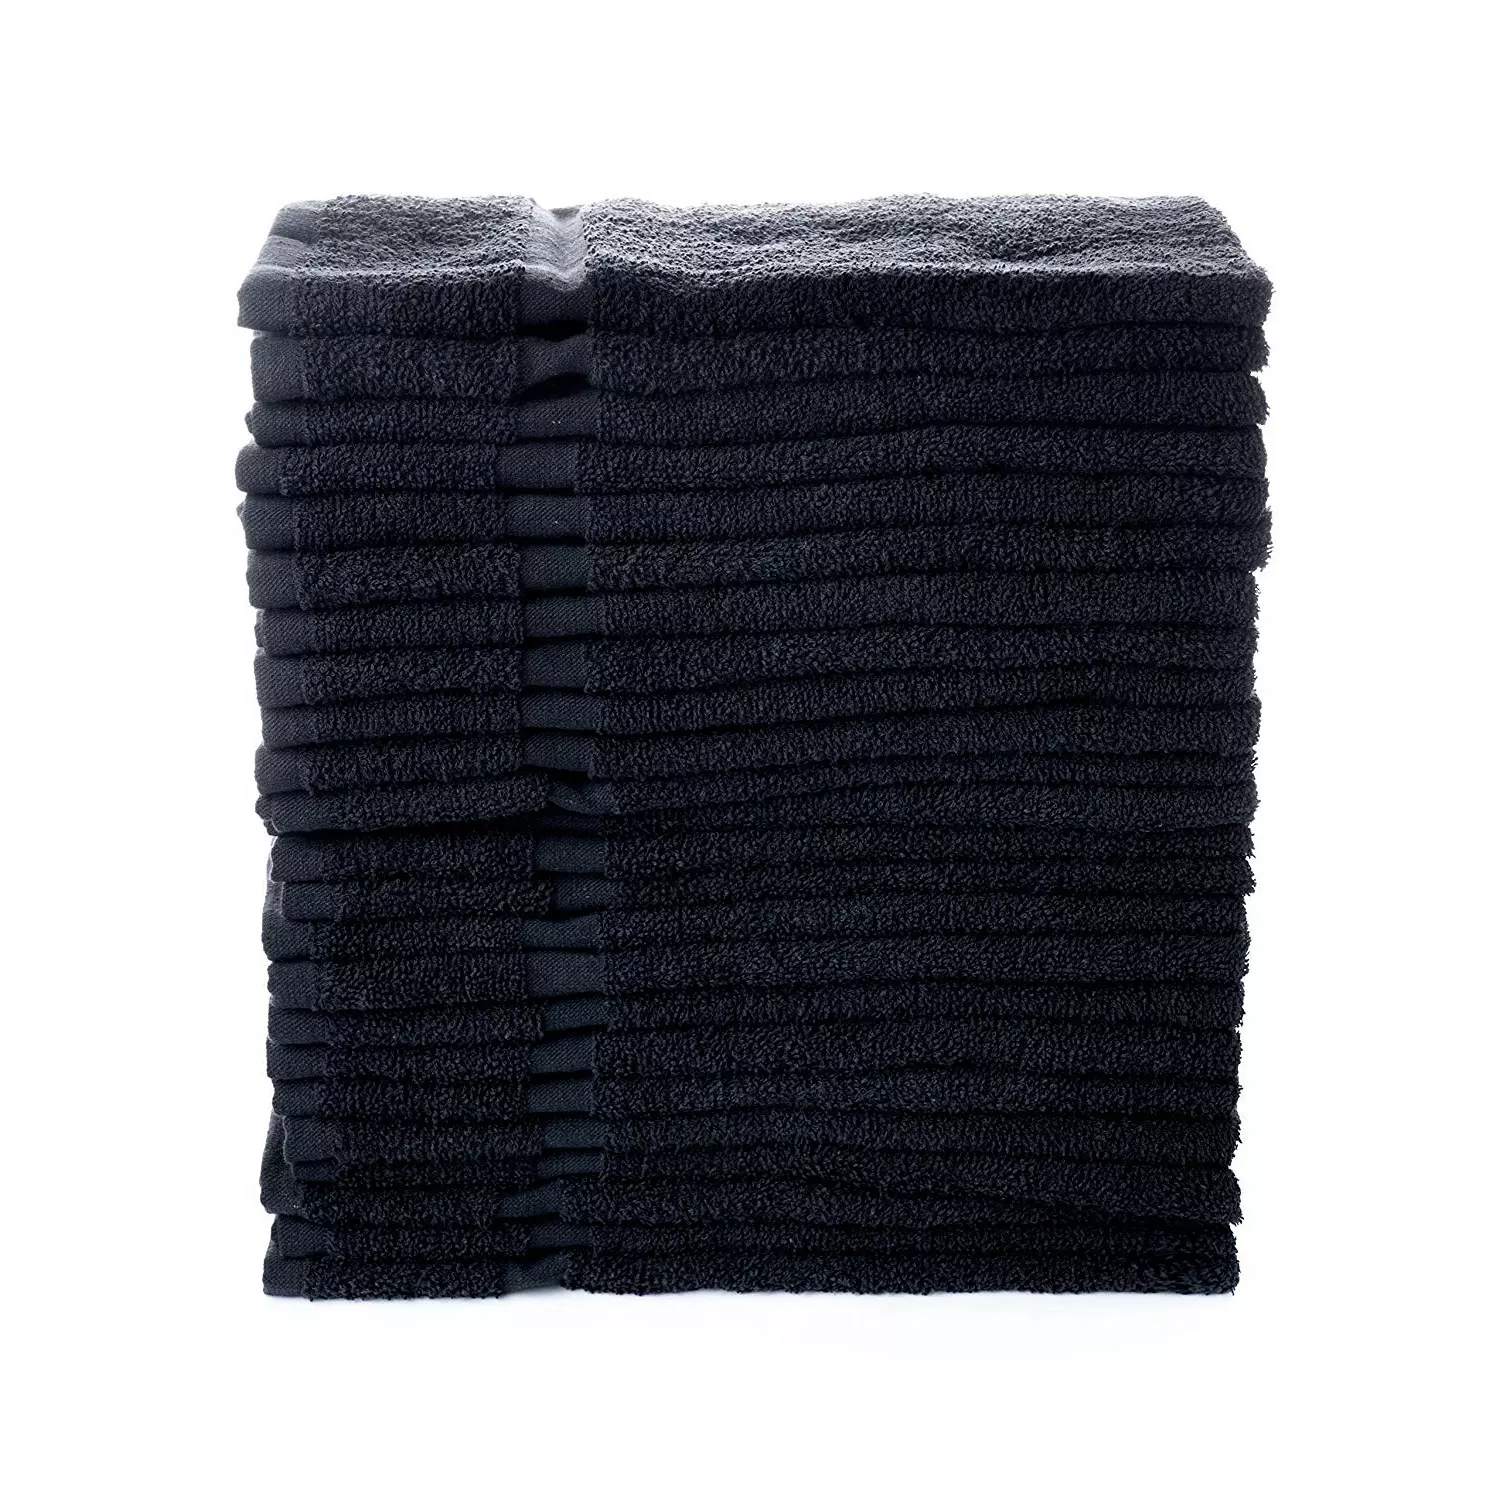 Hometex 100% Cotton Lightweight Hand Towels